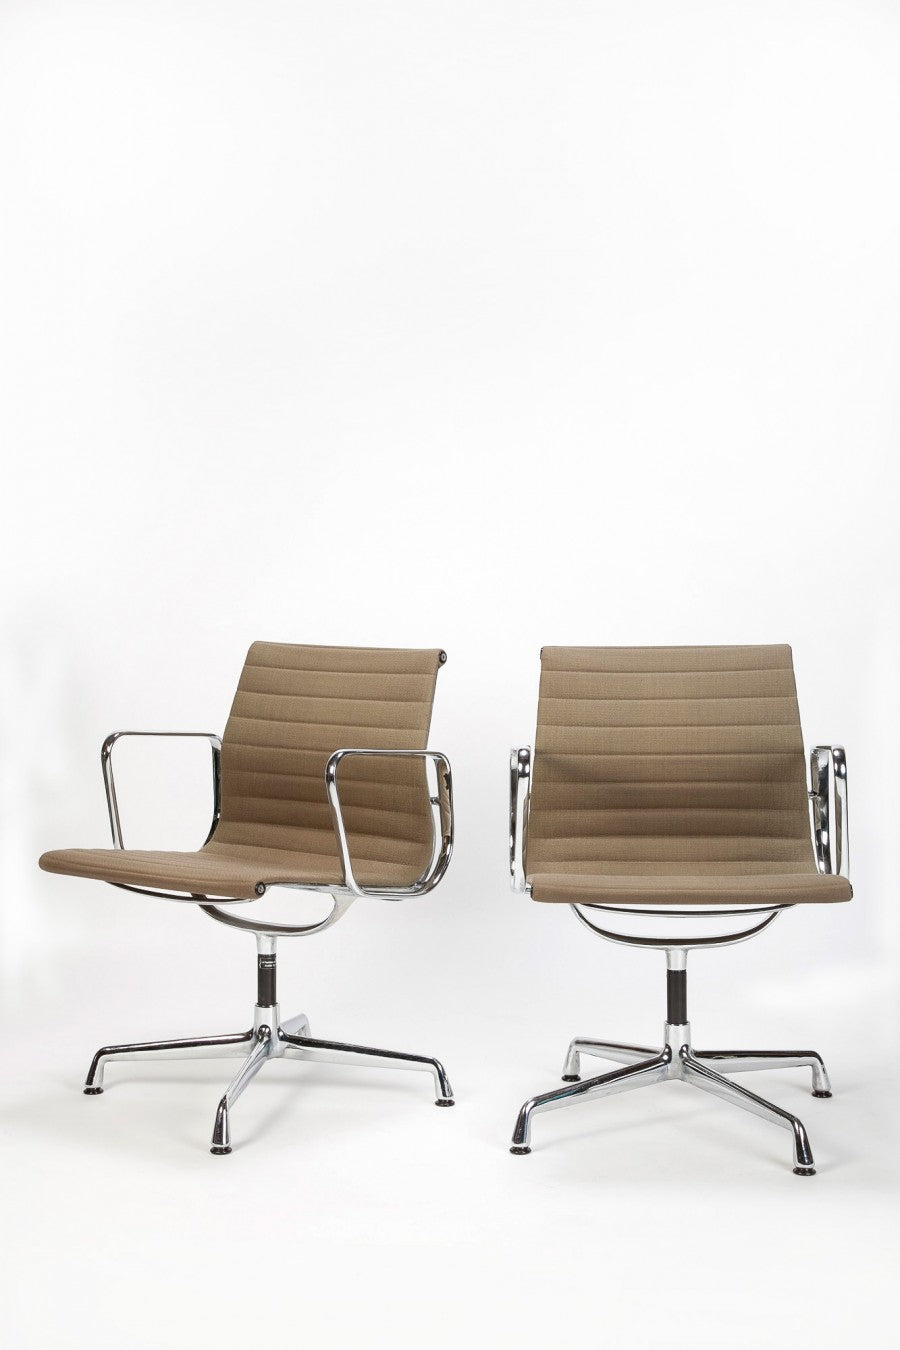 Ein Paar Drehbare Eames Alu Chairs von Charles and Ray Eames